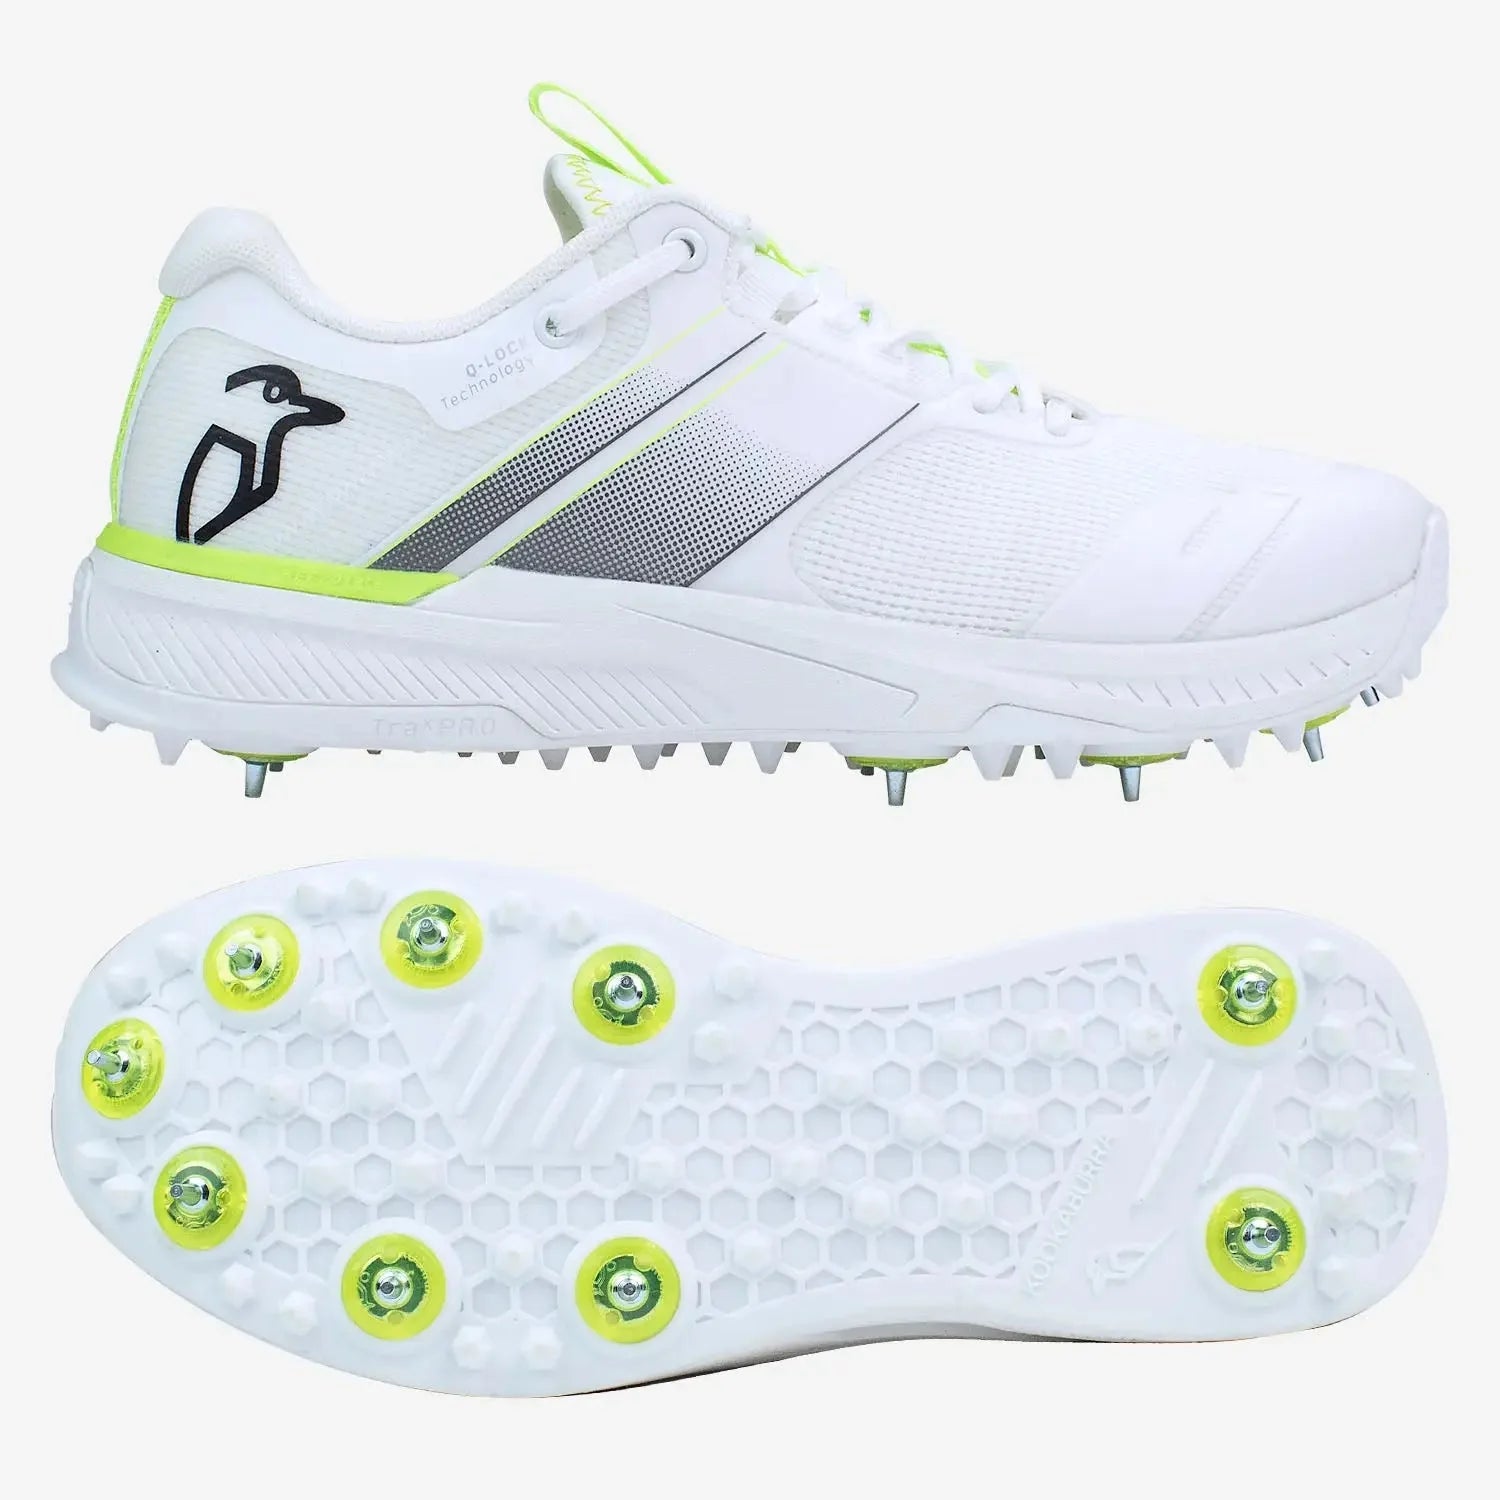 Kookaburra KC Cricket Players The Most Advanced Spike - White/Lime 8.5 - FOOTWEAR - FULL SPIKE SOLE